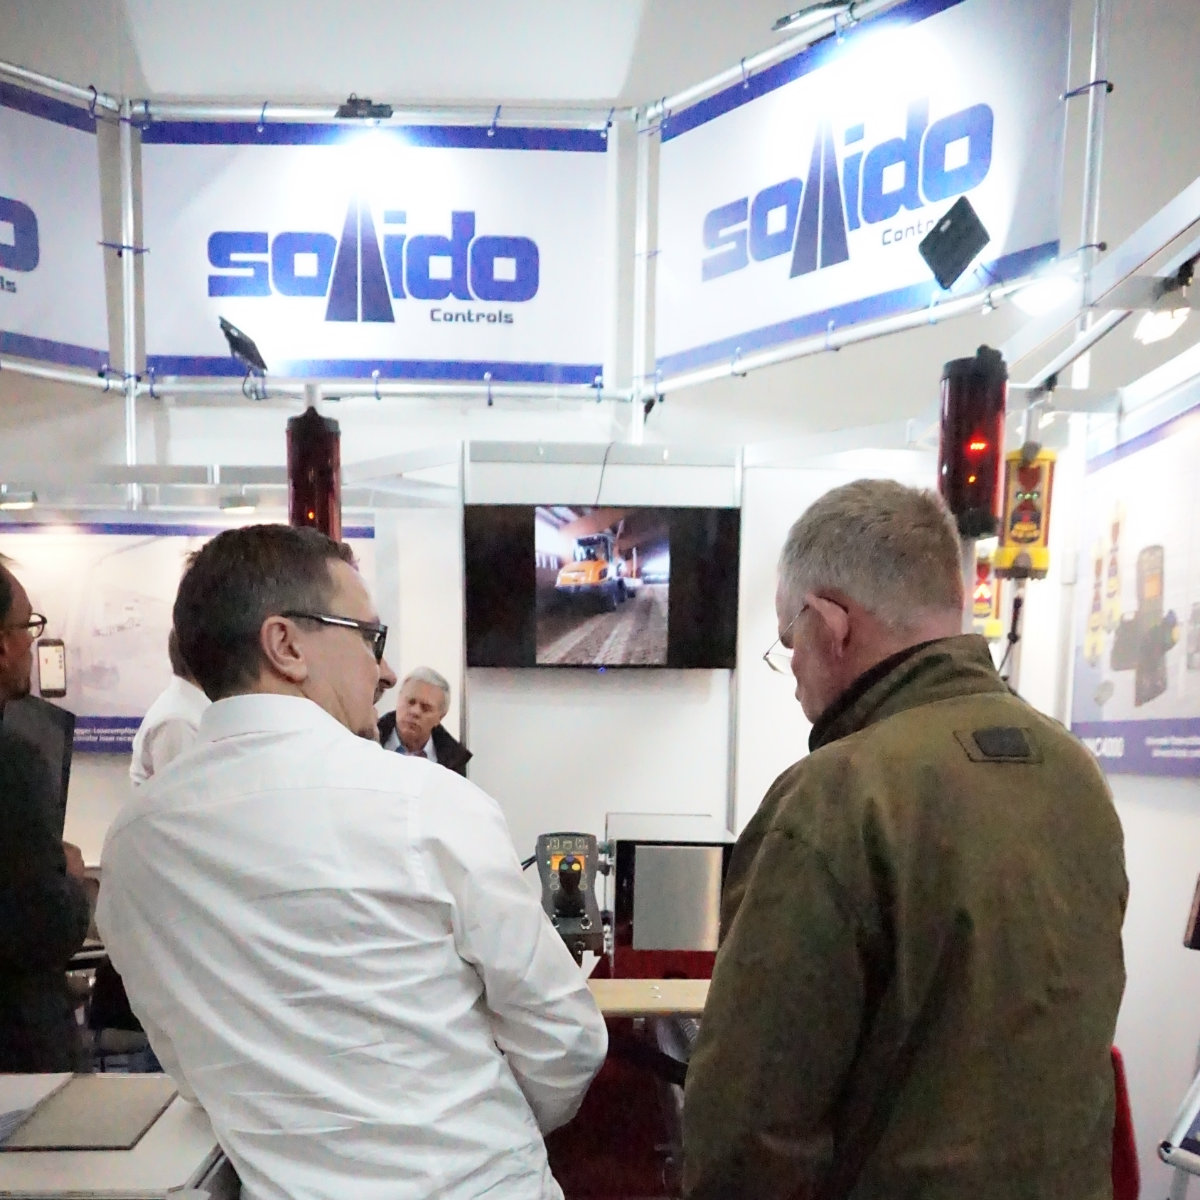 Sollido Controls exhibited at BAUMA 2019